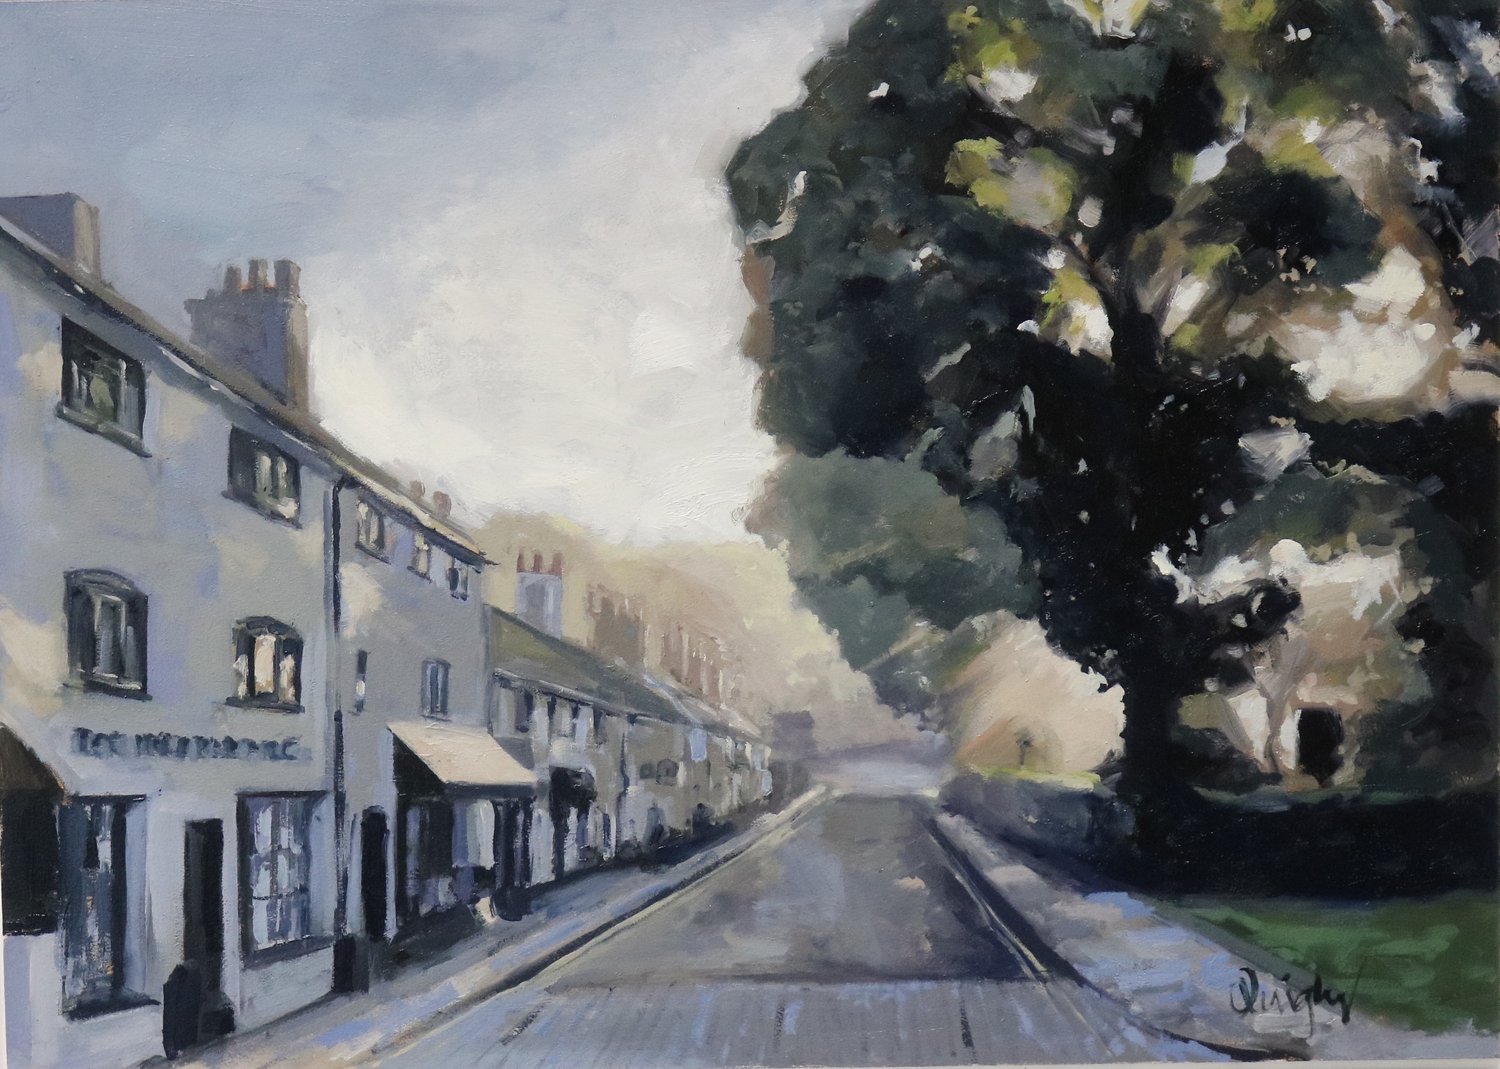 Image of Prestbury High Street - Tom Quigley